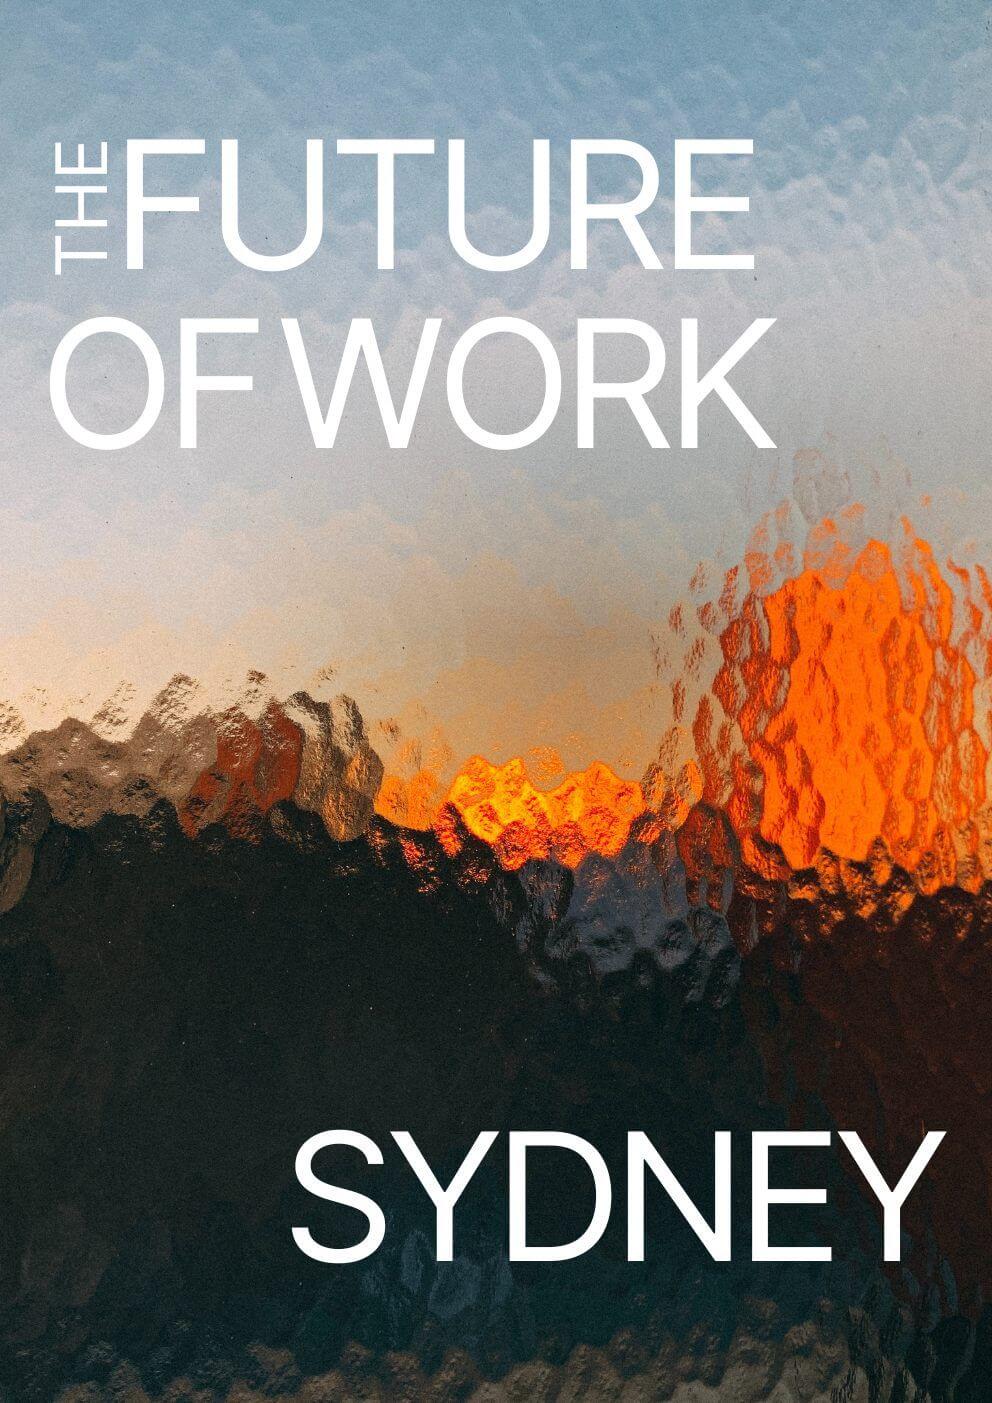 The Future of Work Sydney